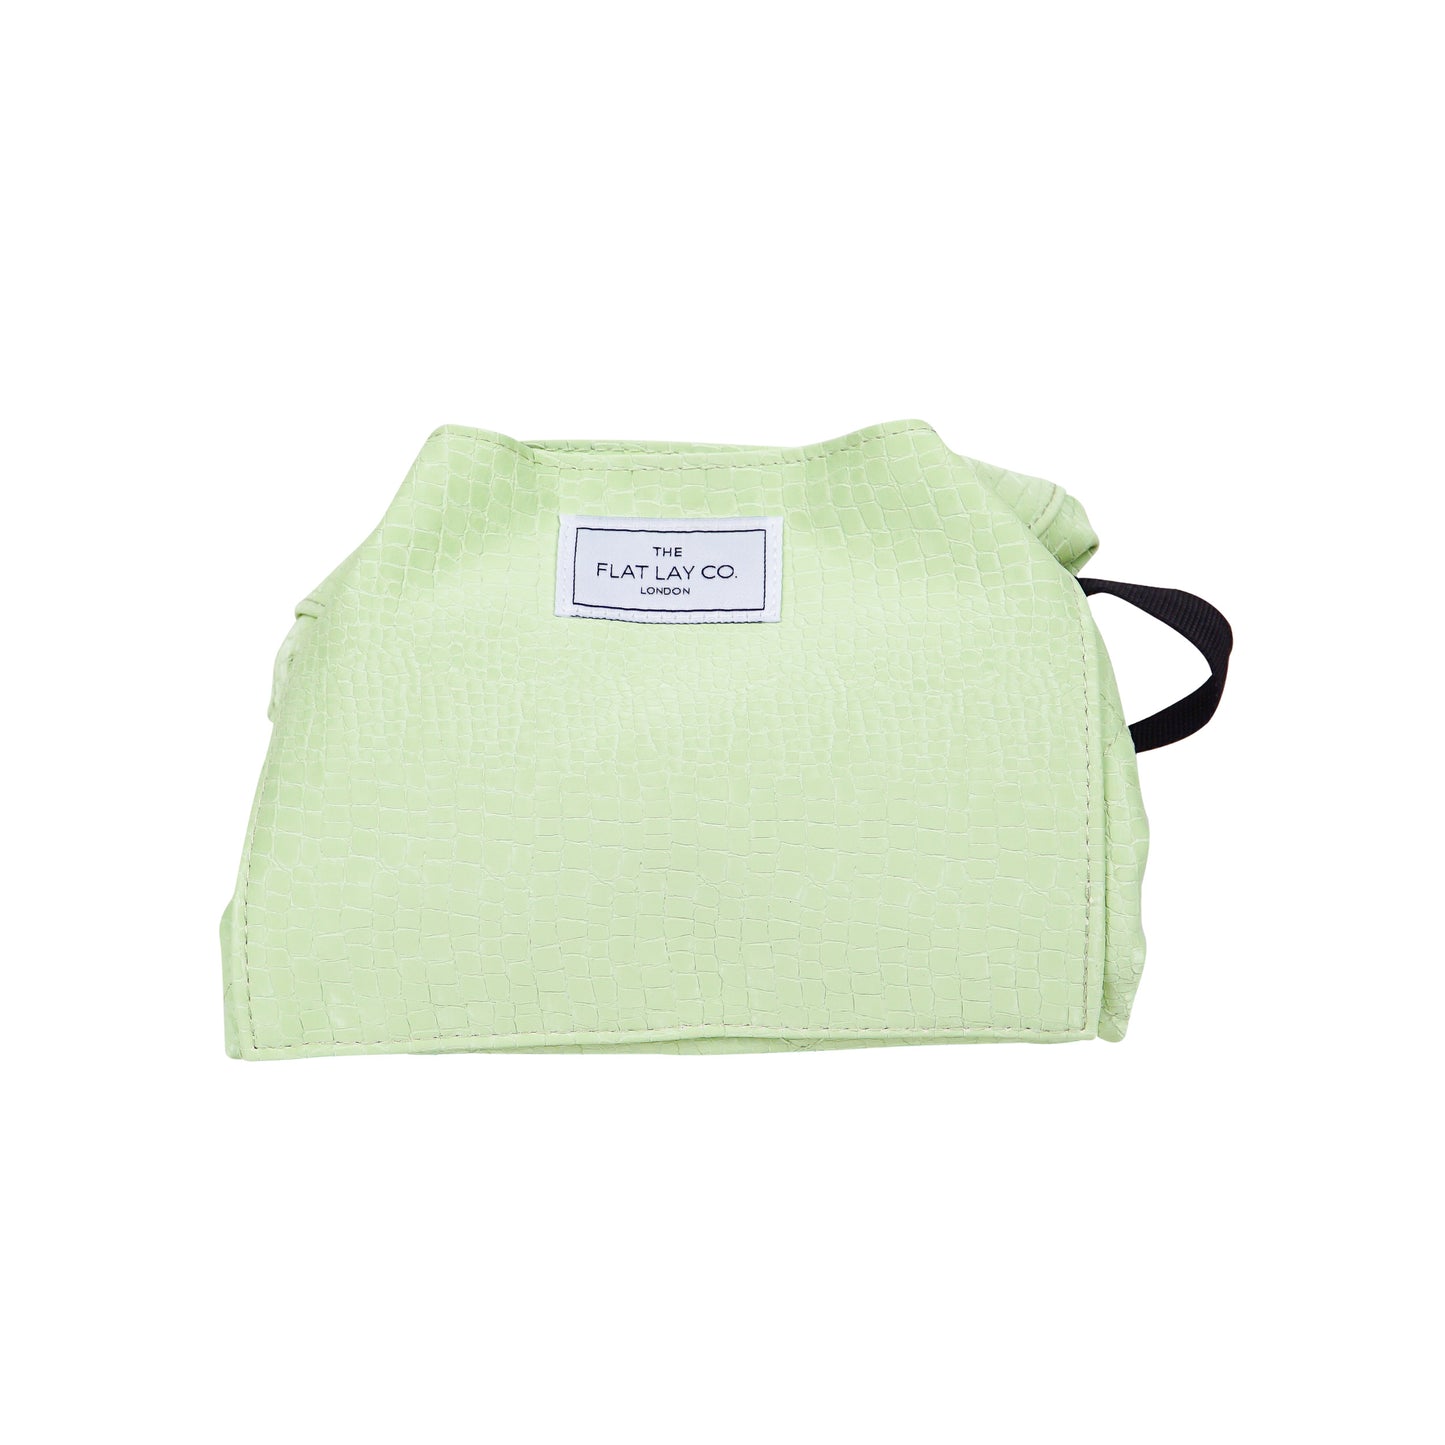 Green Croc Full Size Flat Lay Makeup Bag